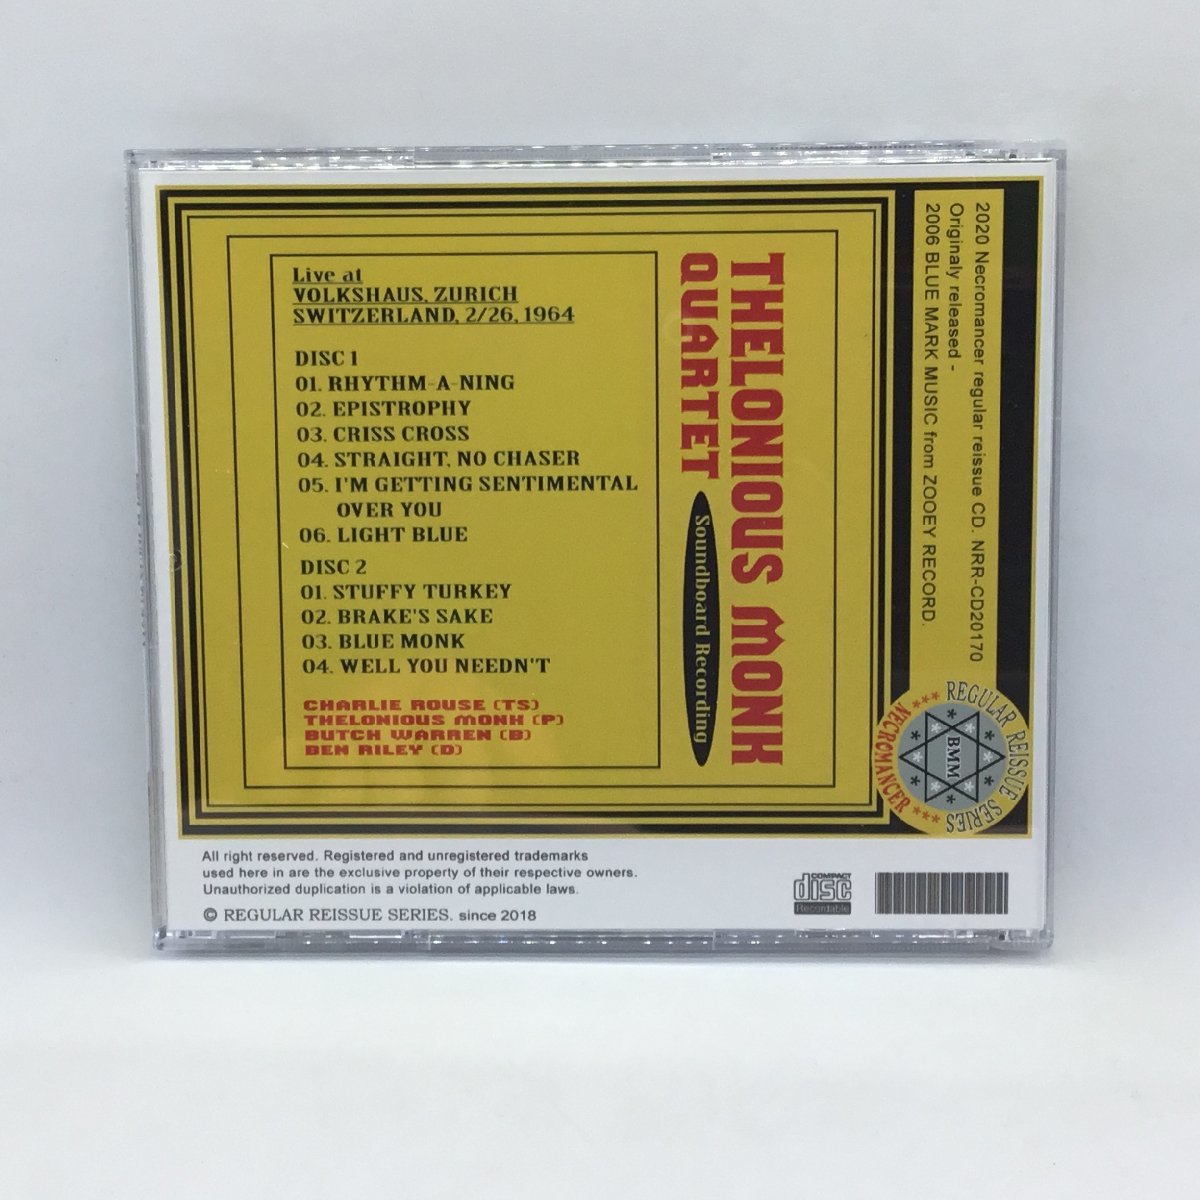 CD-R ◇ THELONIOUS MONK QUARTET / LIVE IN ZURICH 1964 (2CD-R) NRR-CD 20170　セロニアス・モンク_画像2